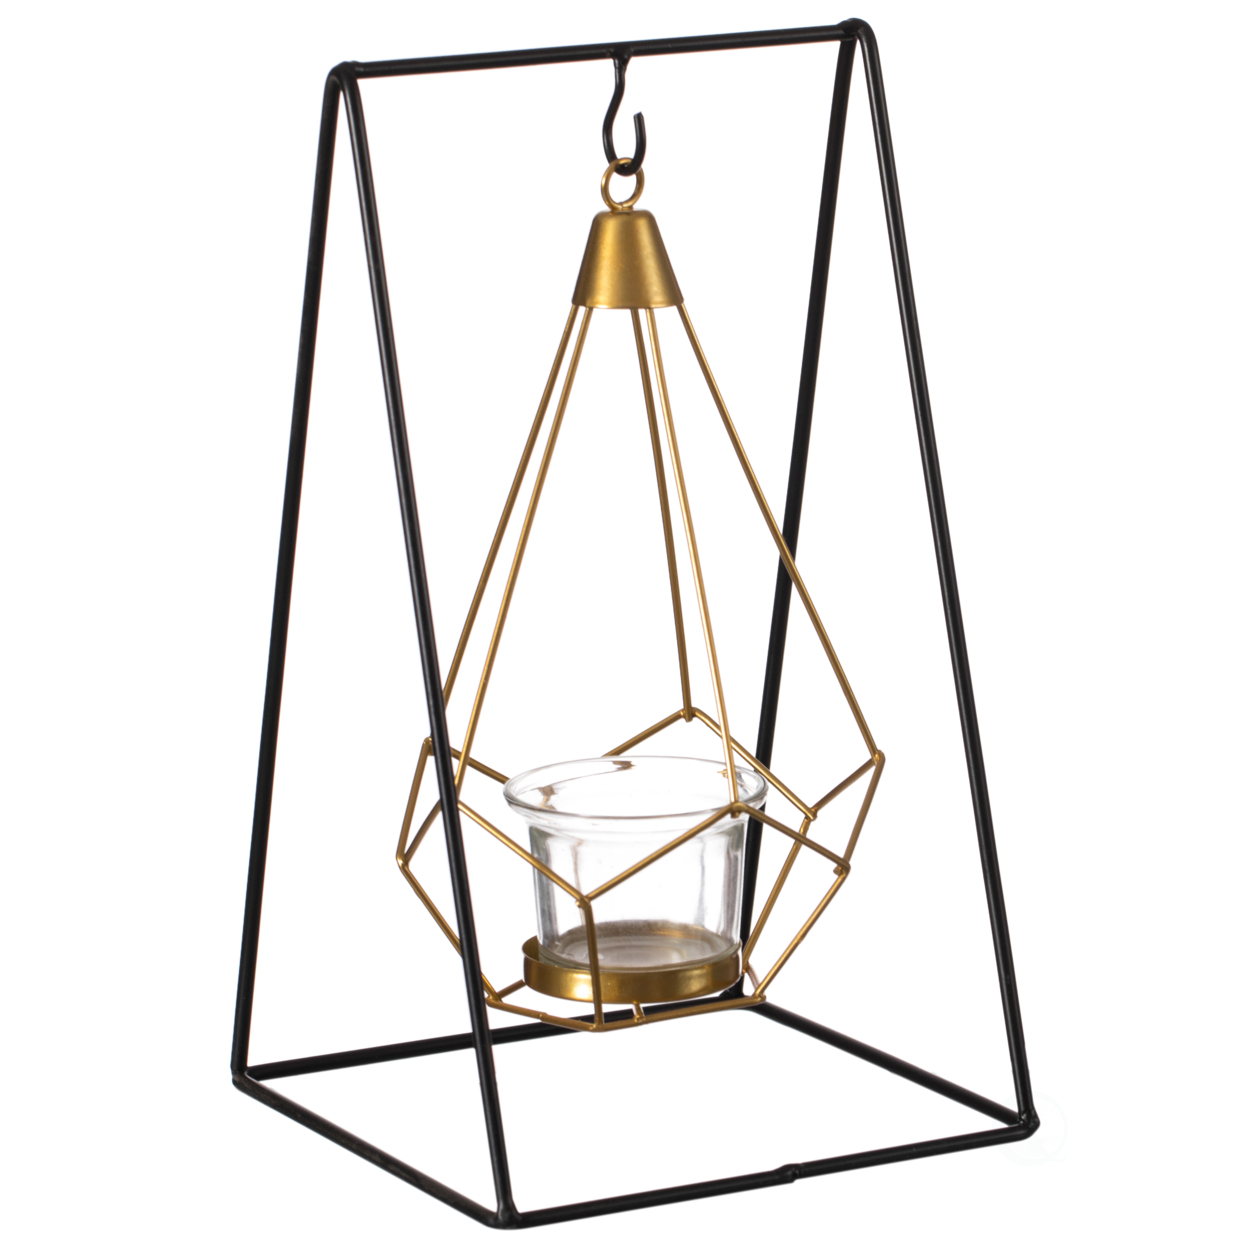 Geometric Framed Swinging Votive Candle Holder Decorative Modern Hanging Lantern Tabletop Centerpiece